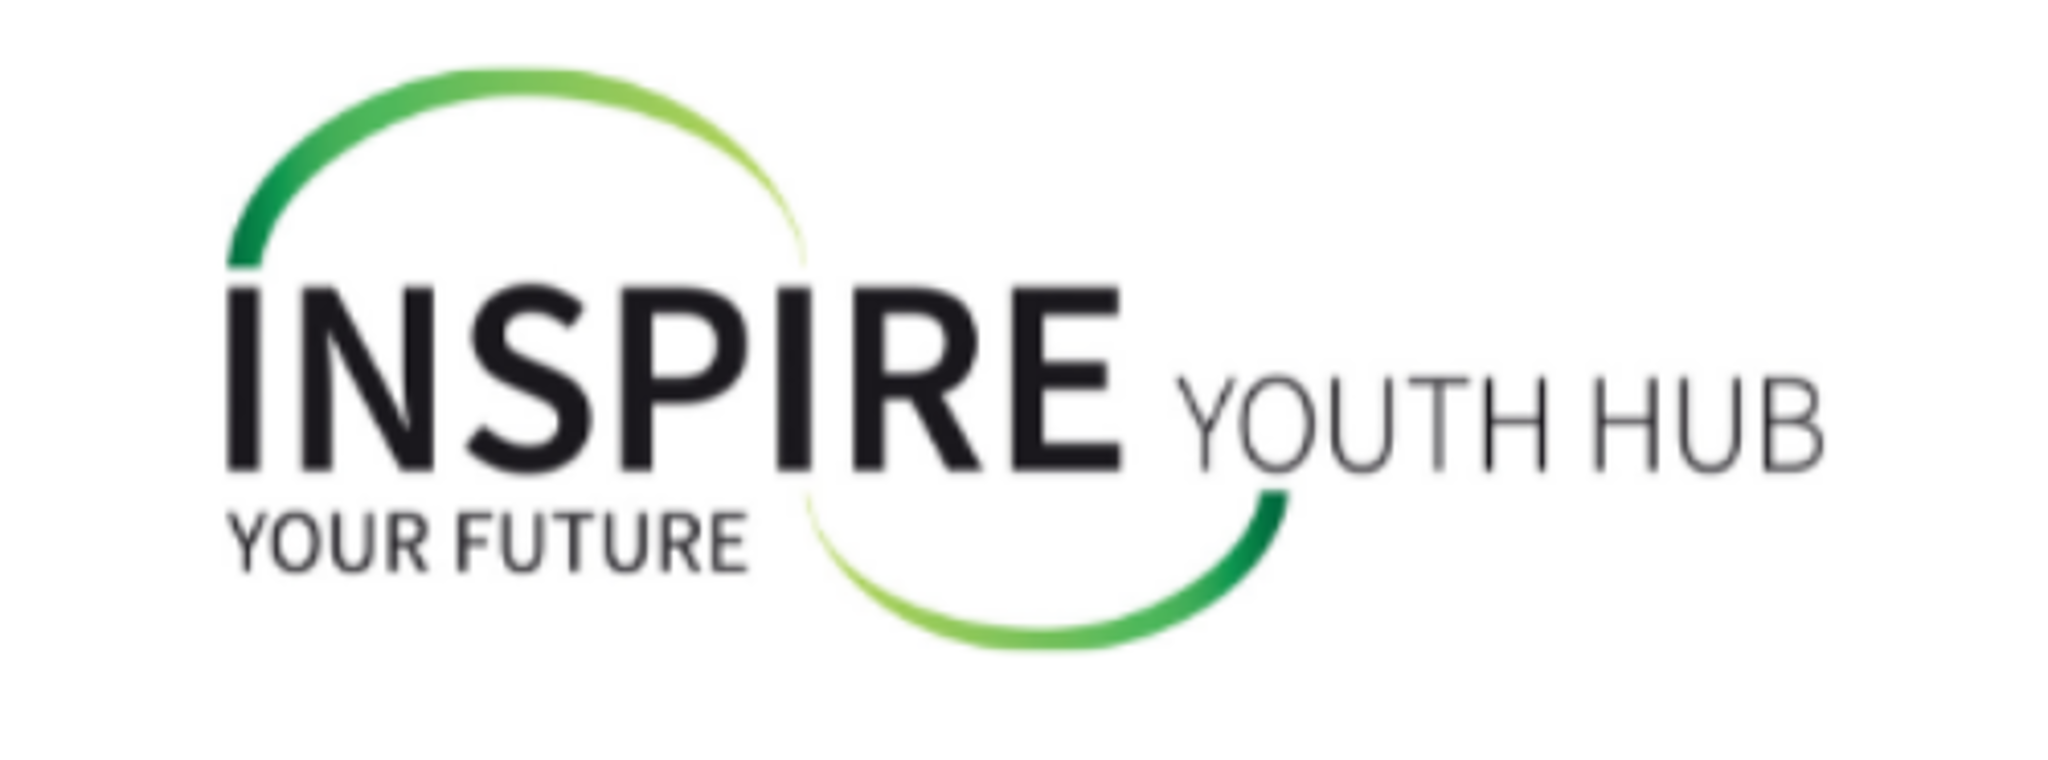 inspire youth hub logo